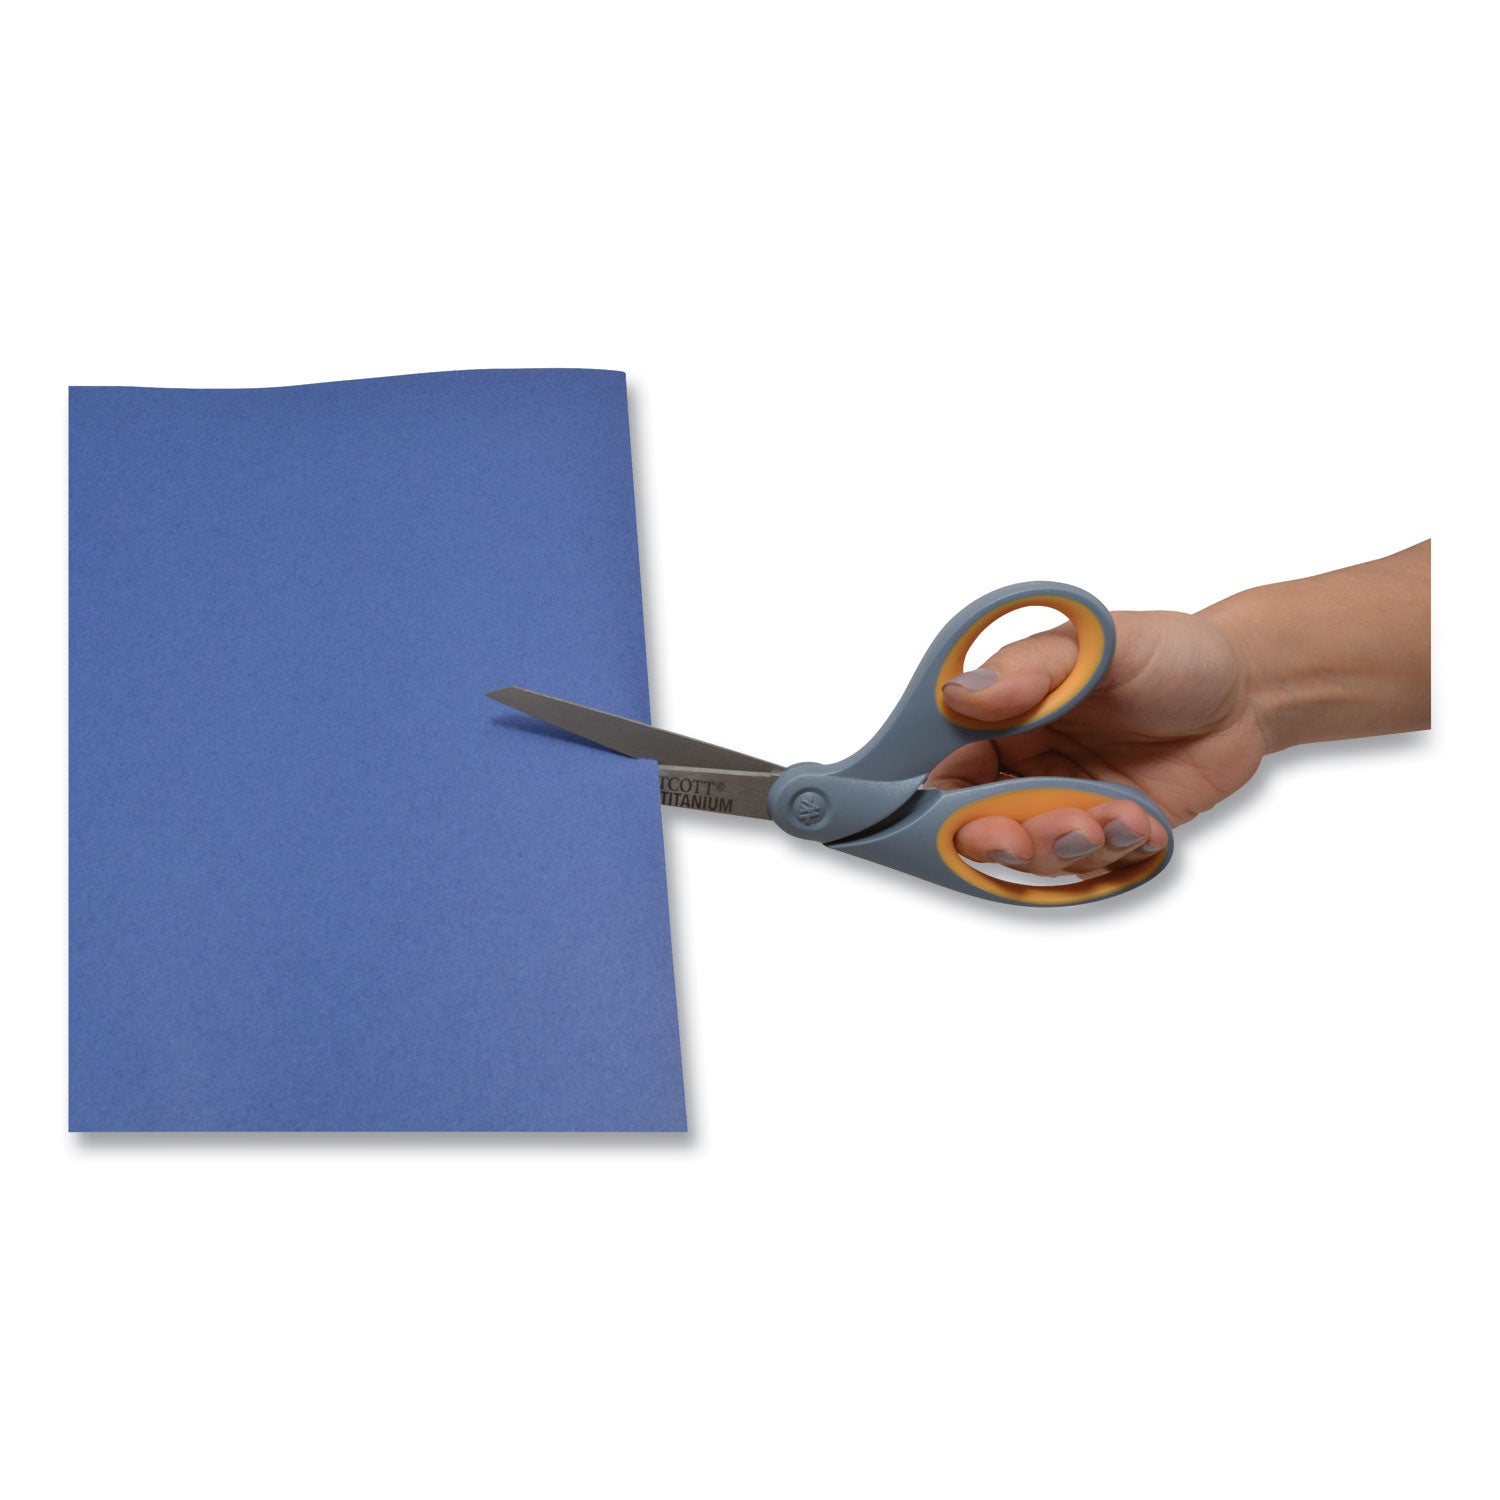 Titanium Bonded Scissors, 8" Long, 3.5" Cut Length, Gray/Yellow Offset Handle - 